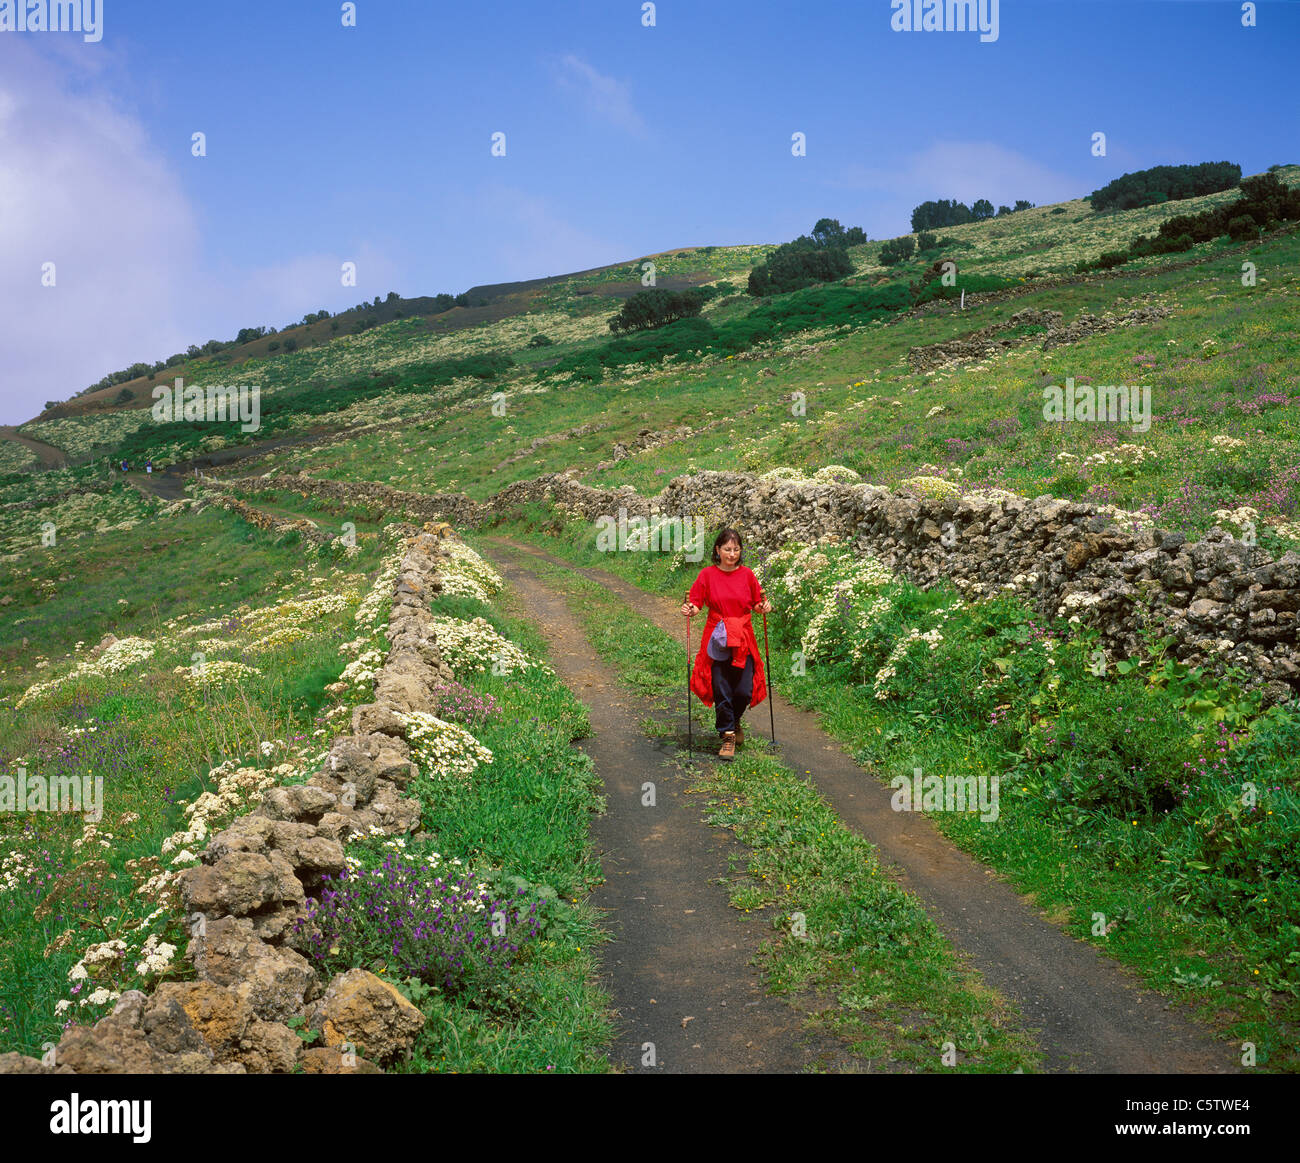 Spain, Canary Islands, El Hierro, Hiking woman at La Dehesa Stock Photo